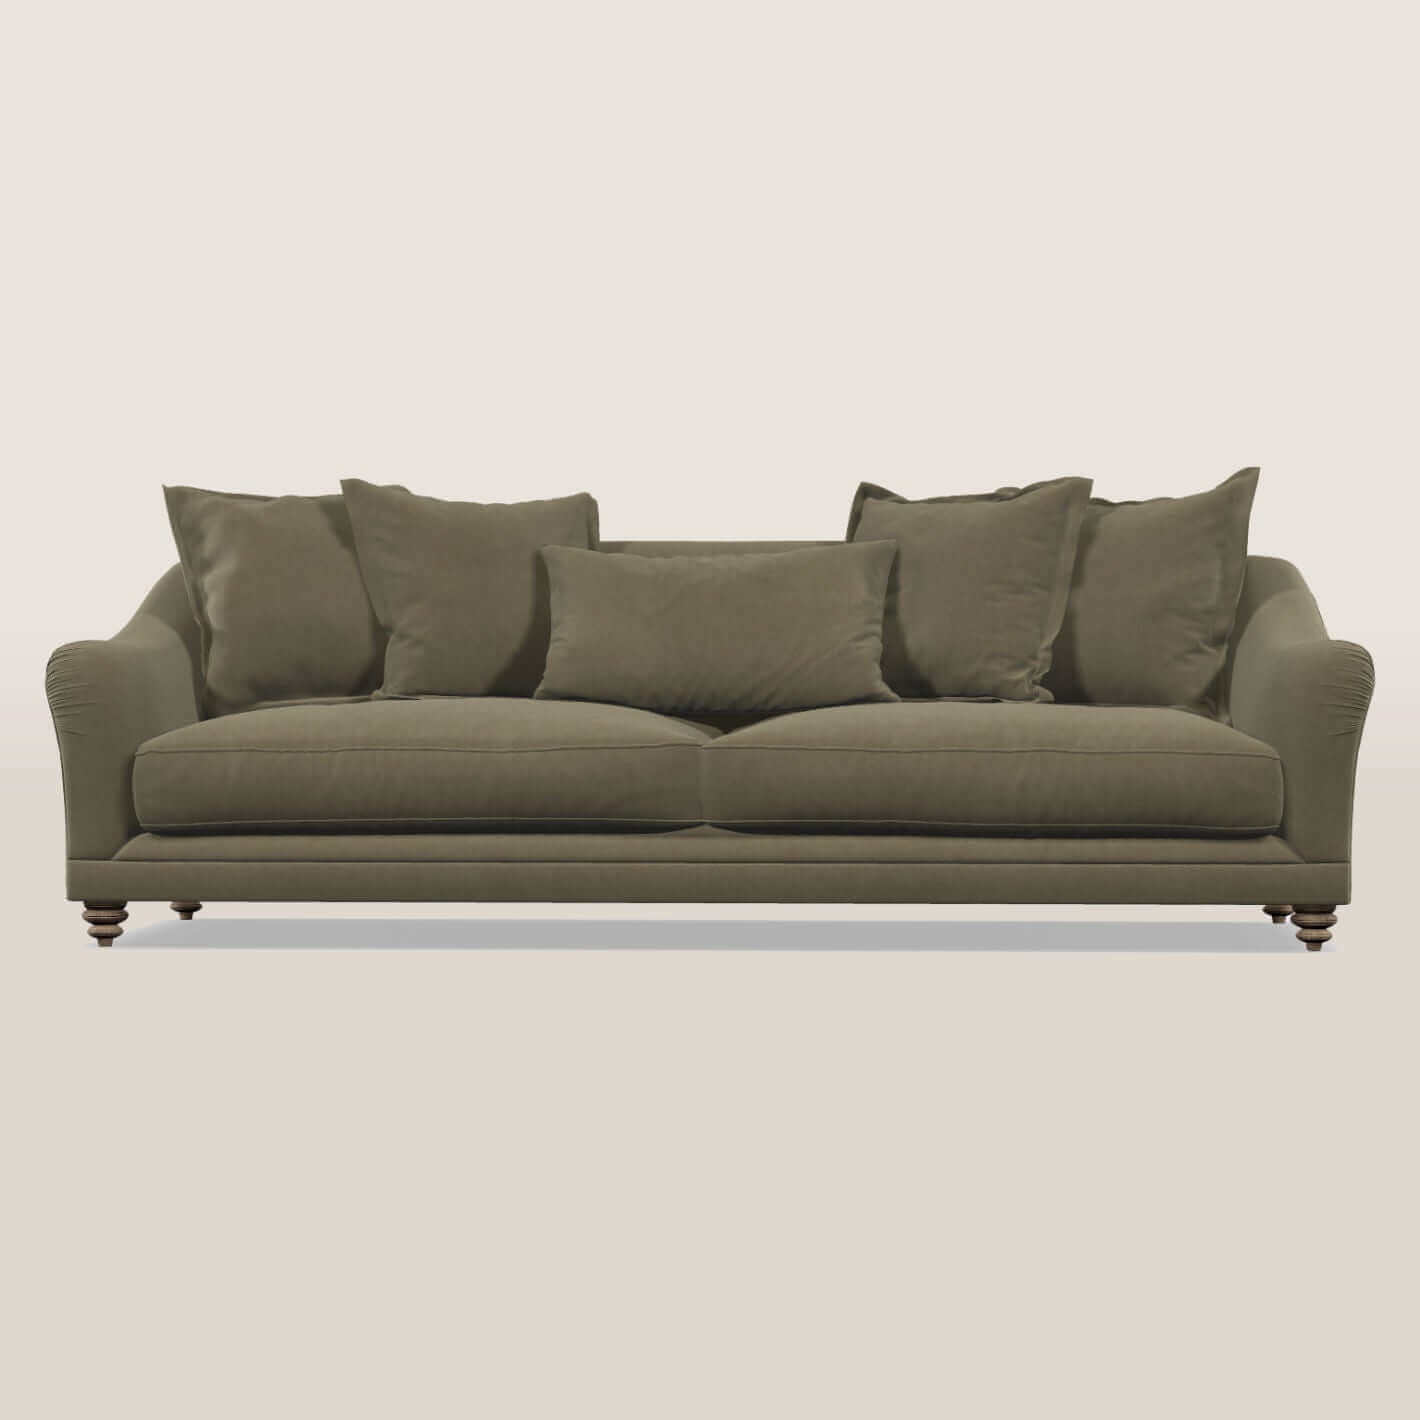 Chagford Slope Arm Sofa